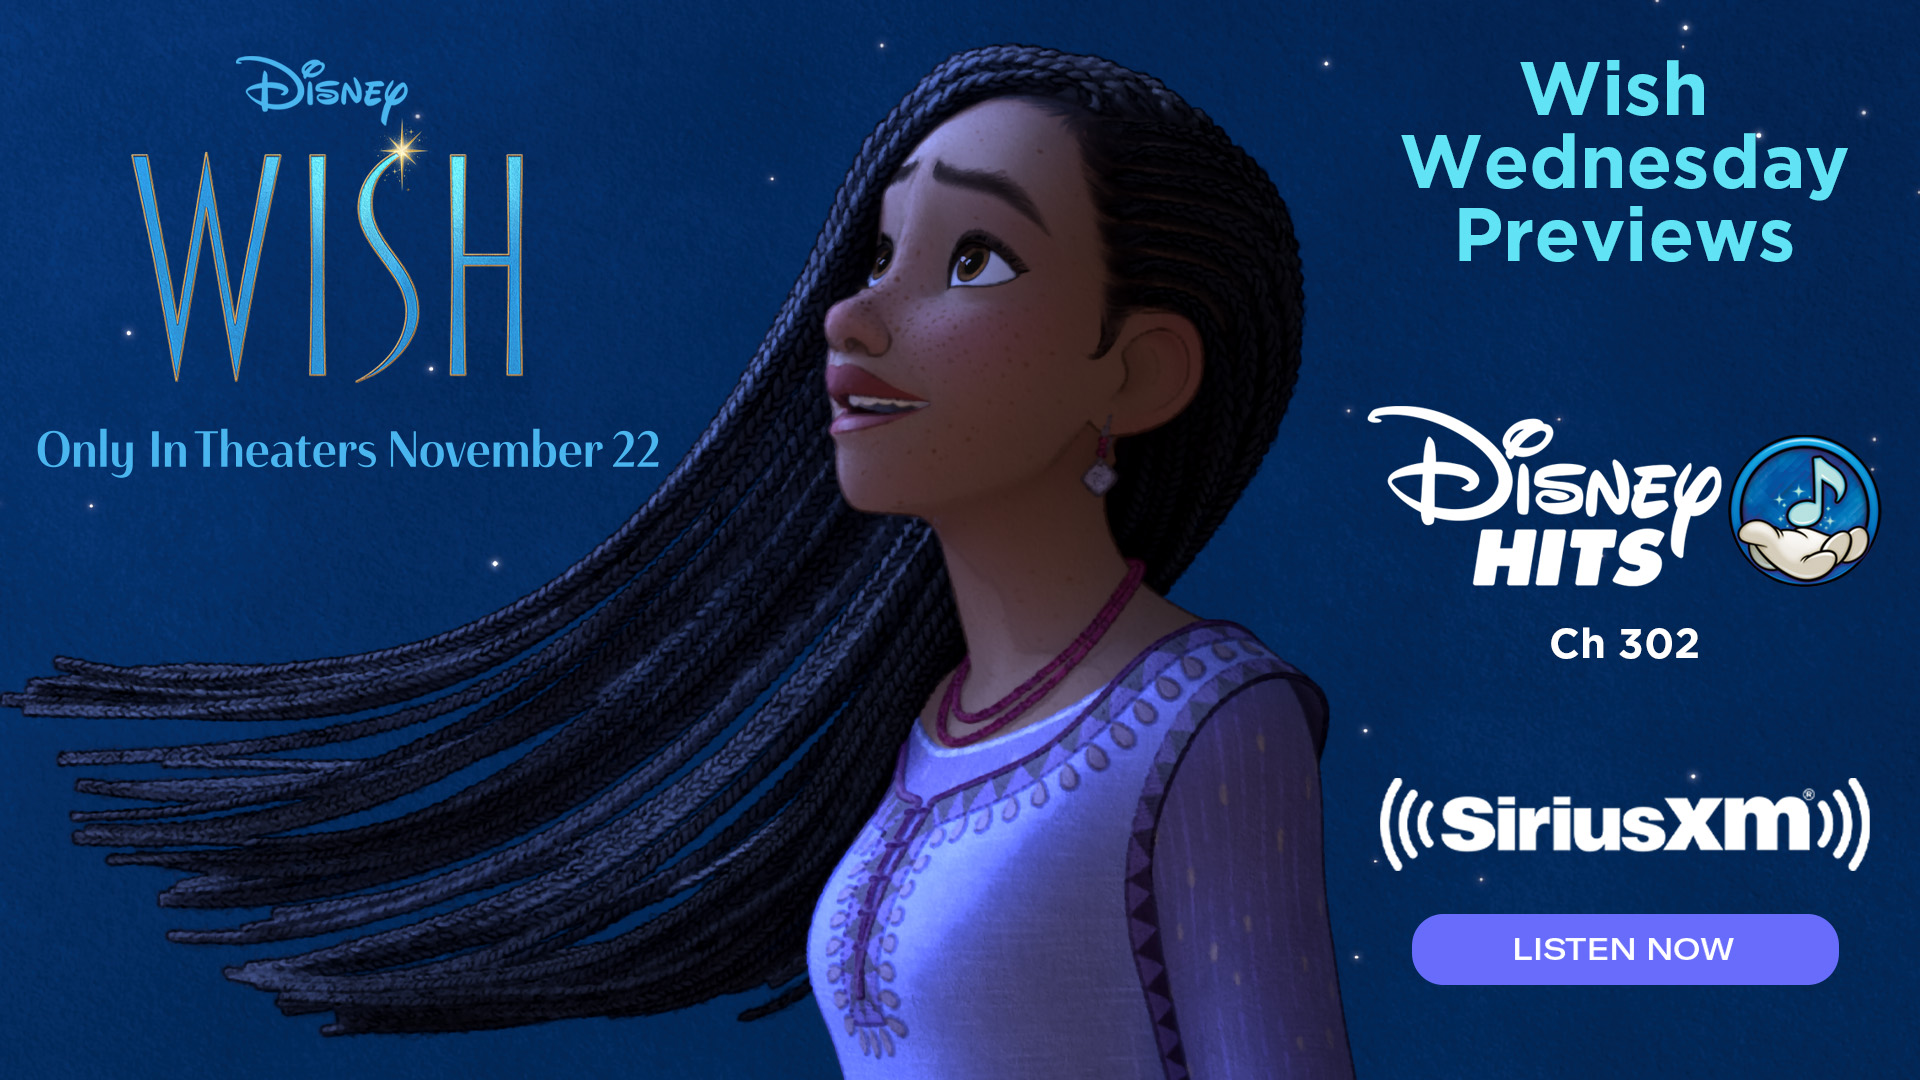 Disney Wish Wednesday Previews on SiriusXM's Disney Hitsc channel